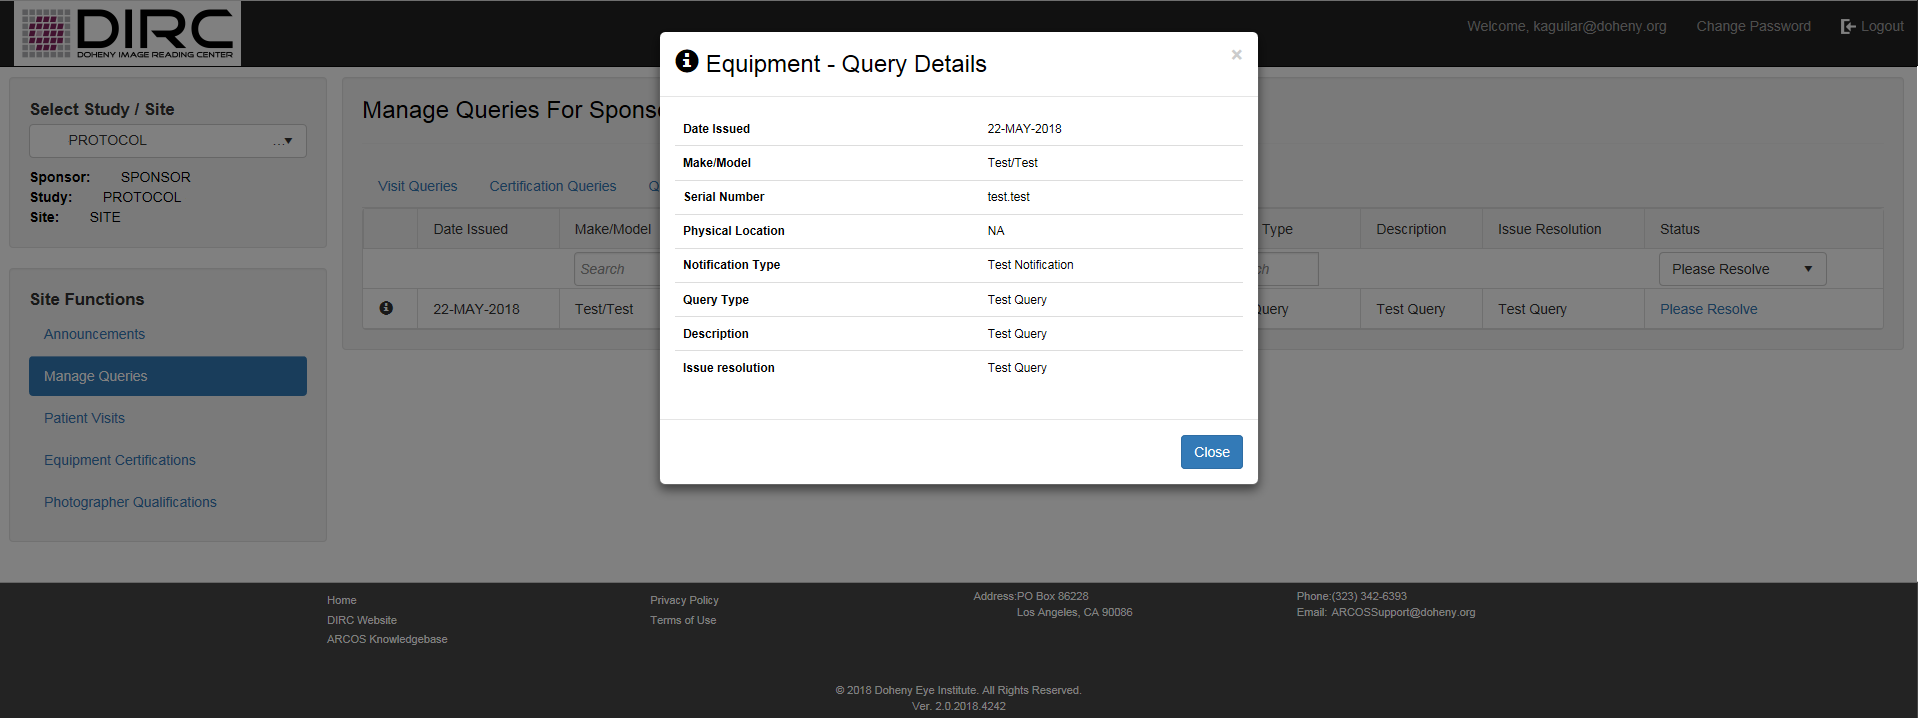 equpment-query-details